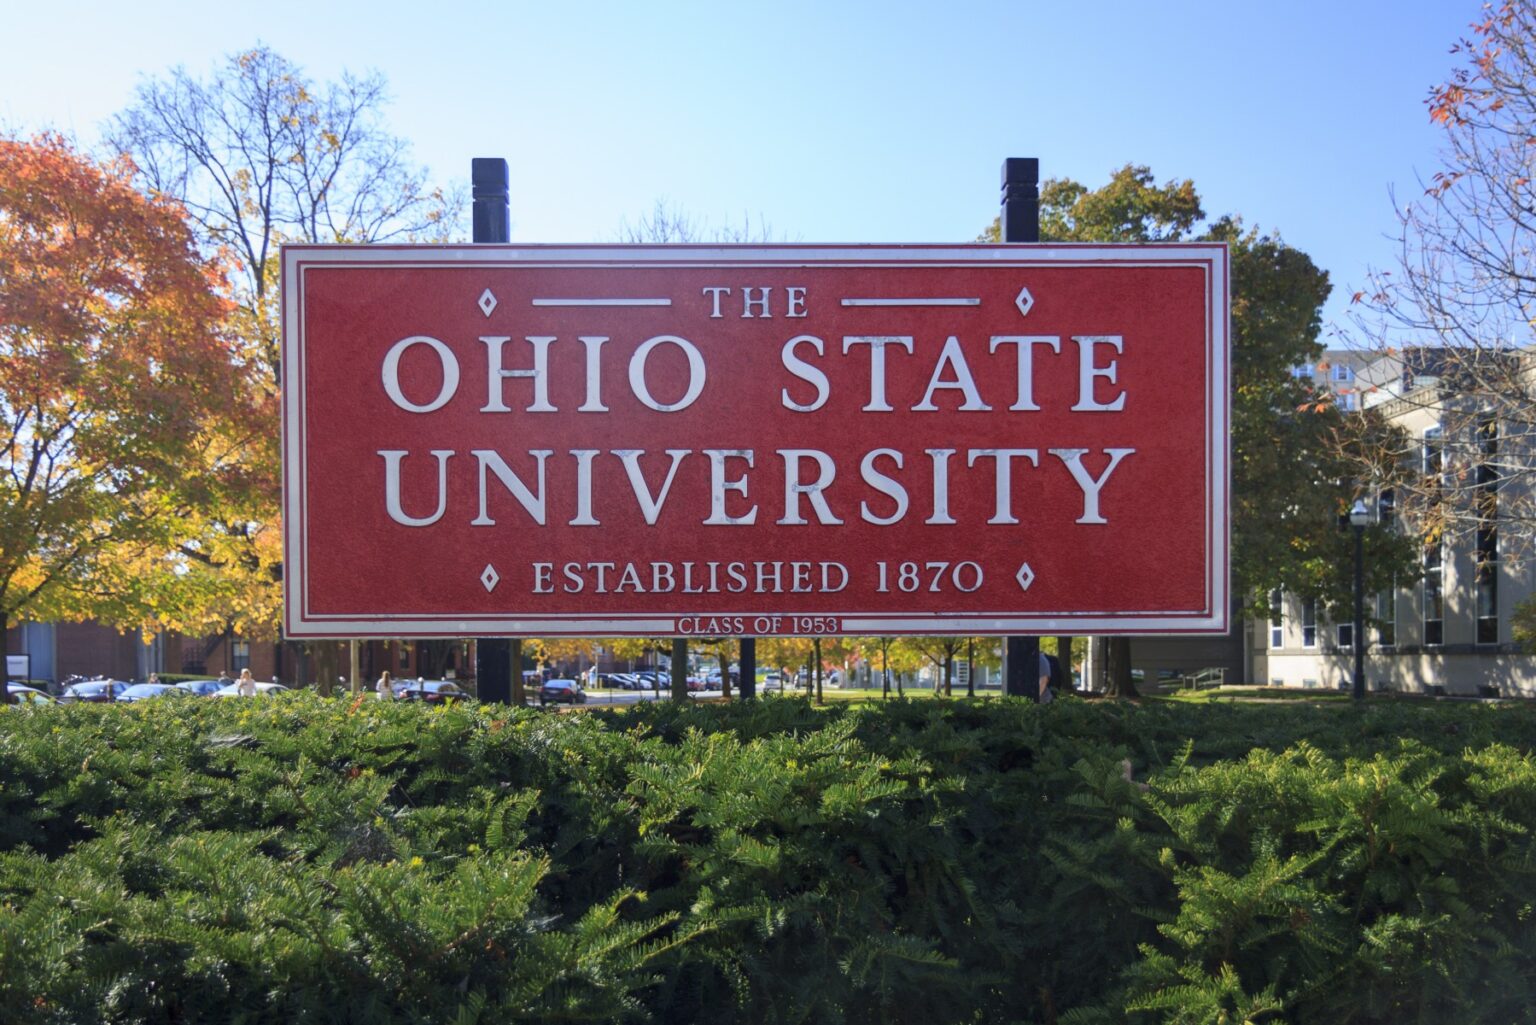 Ohio State University Summer Institute brings together educators